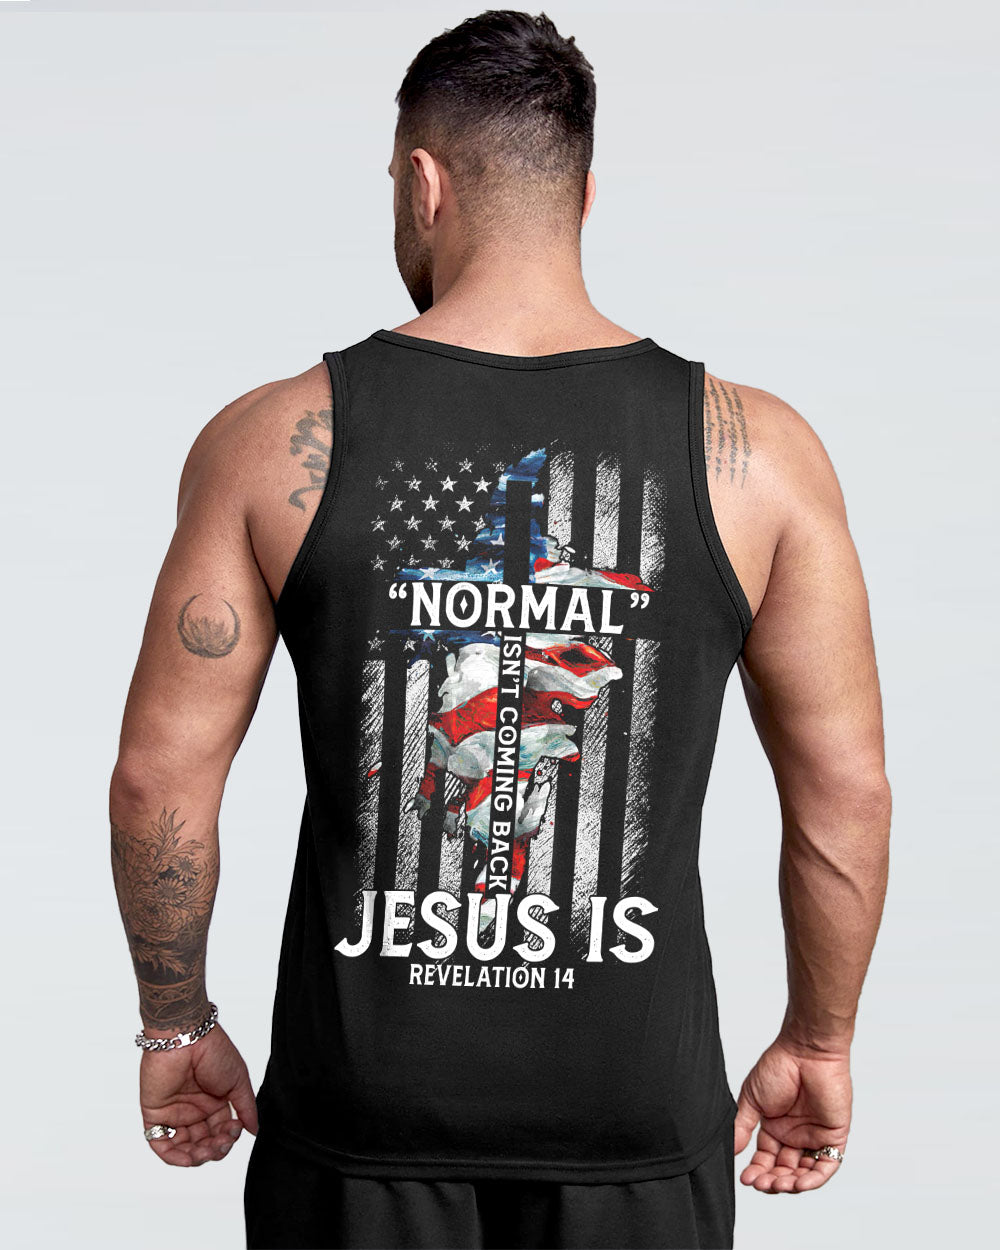 Normal Isn't Coming Back Men's Christian Tanks